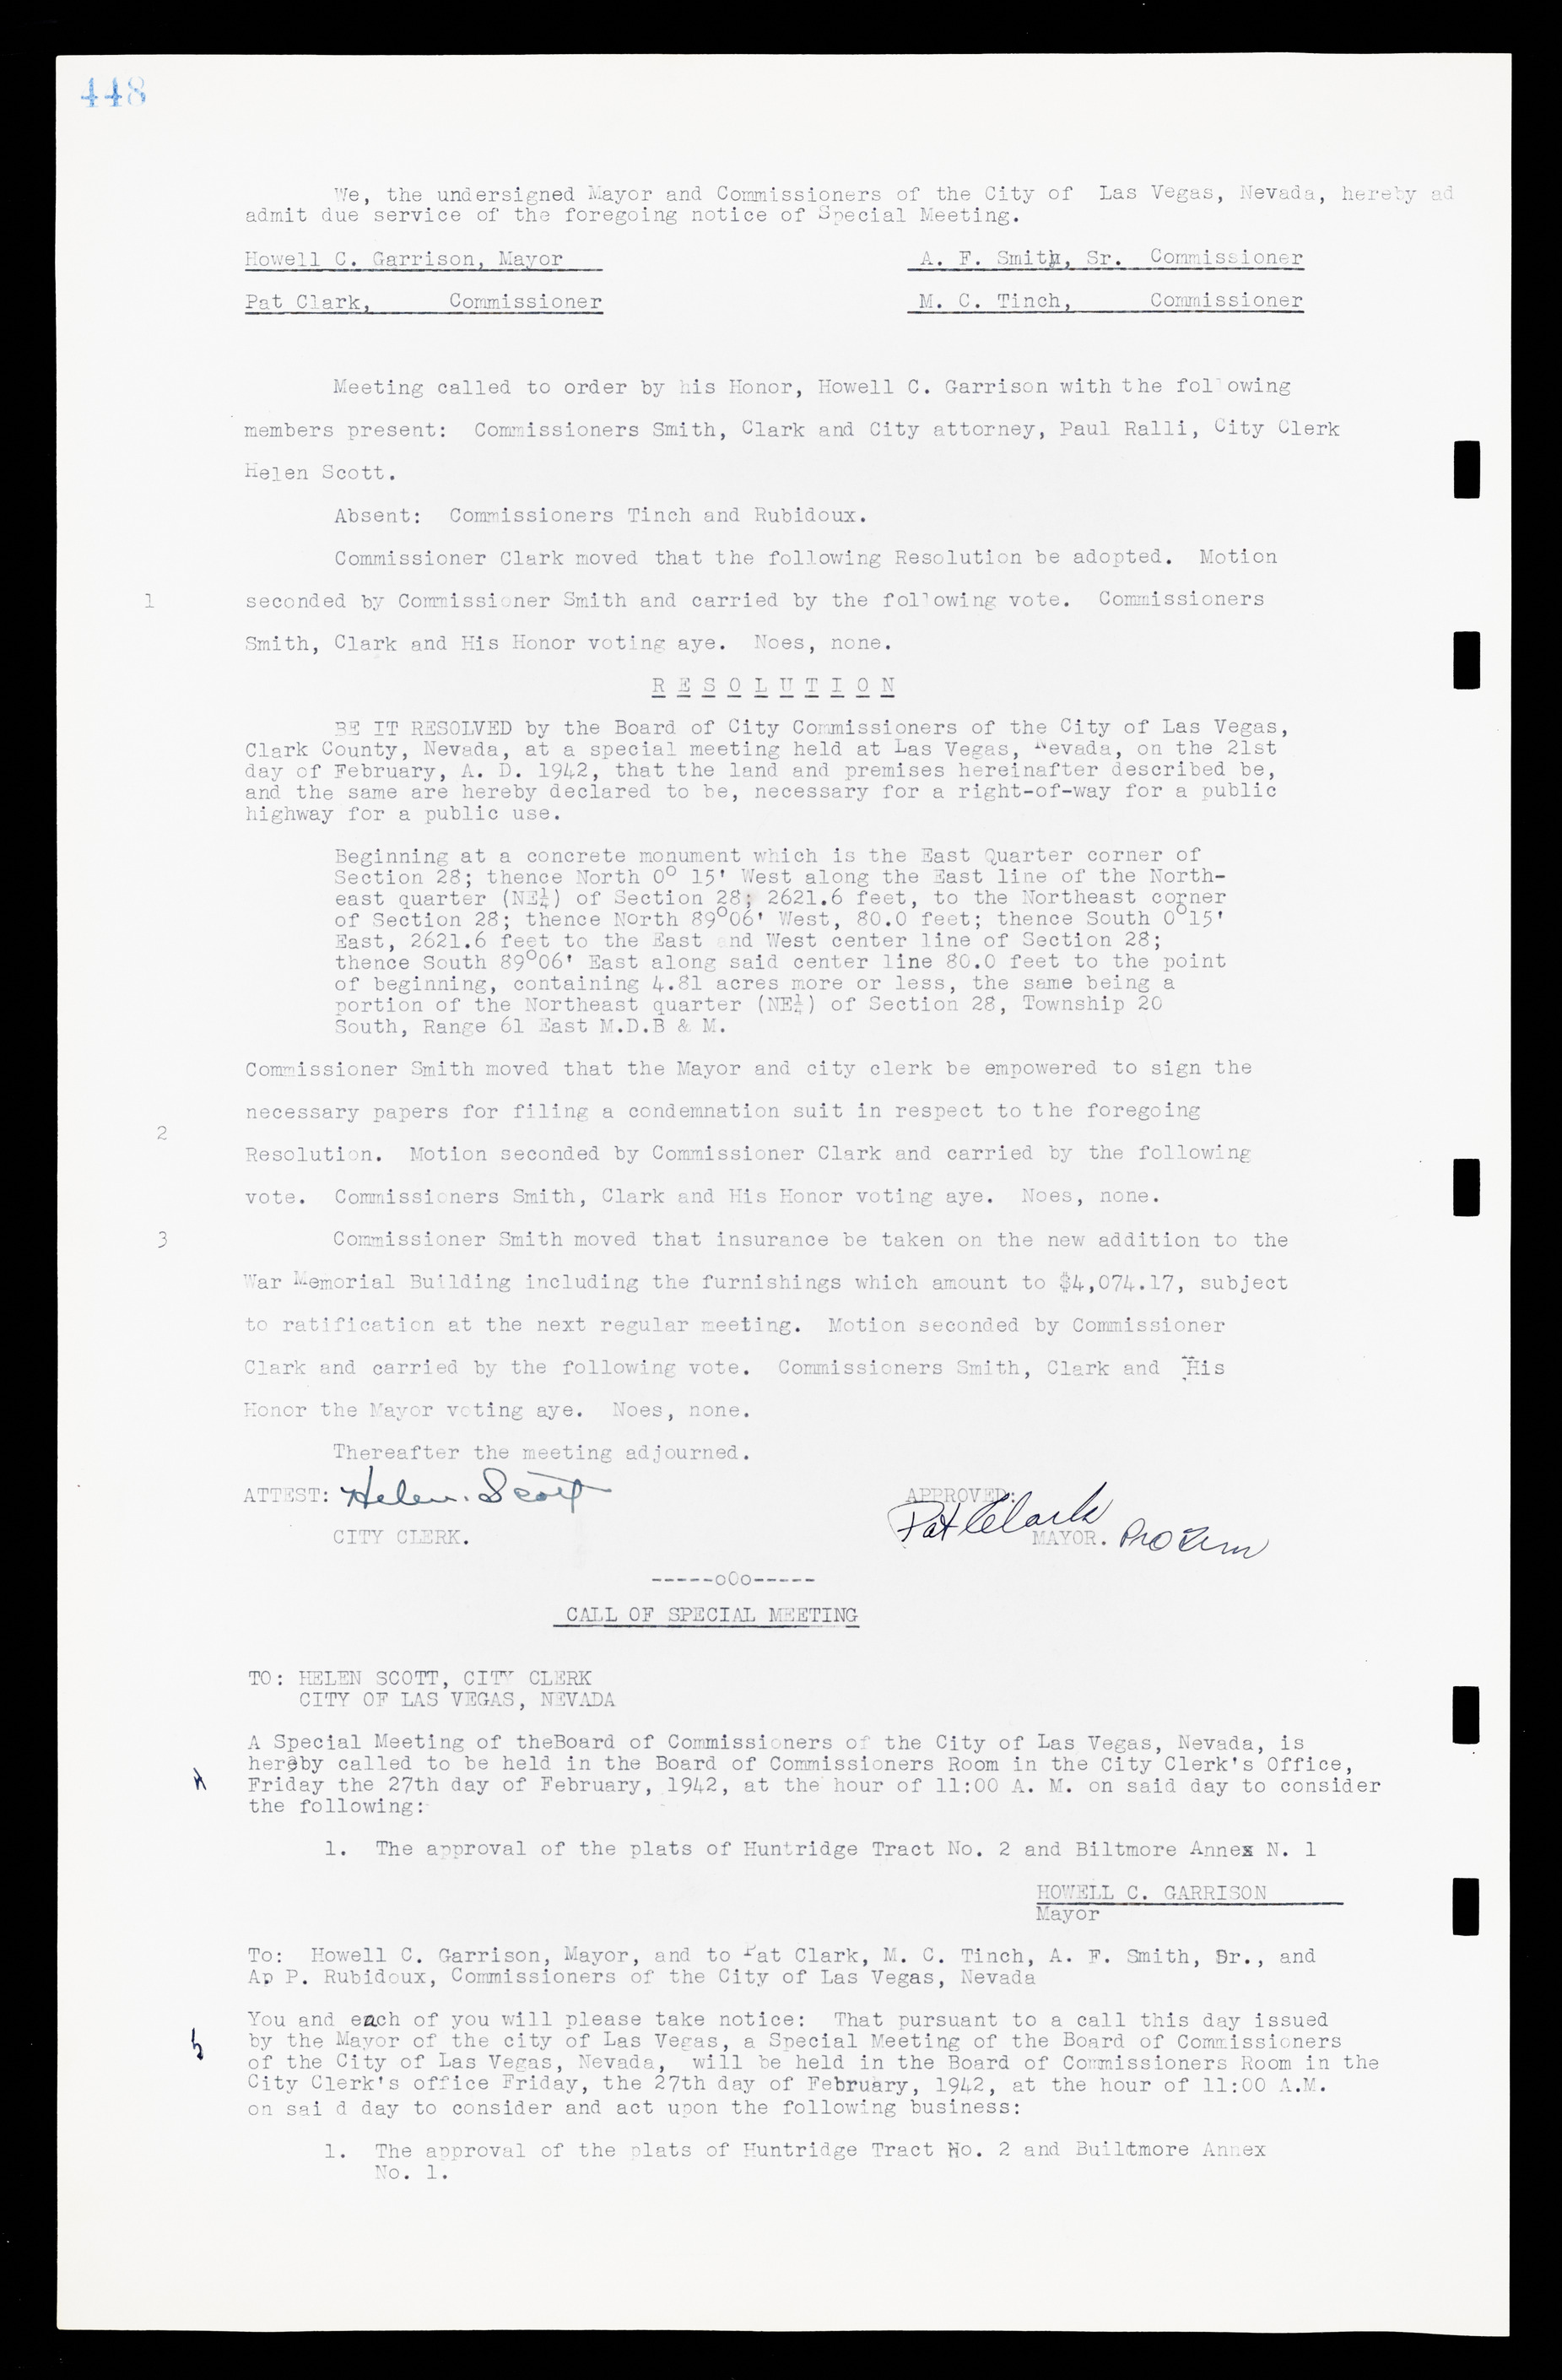 Las Vegas City Commission Minutes, February 17, 1937 to August 4, 1942, lvc000004-476